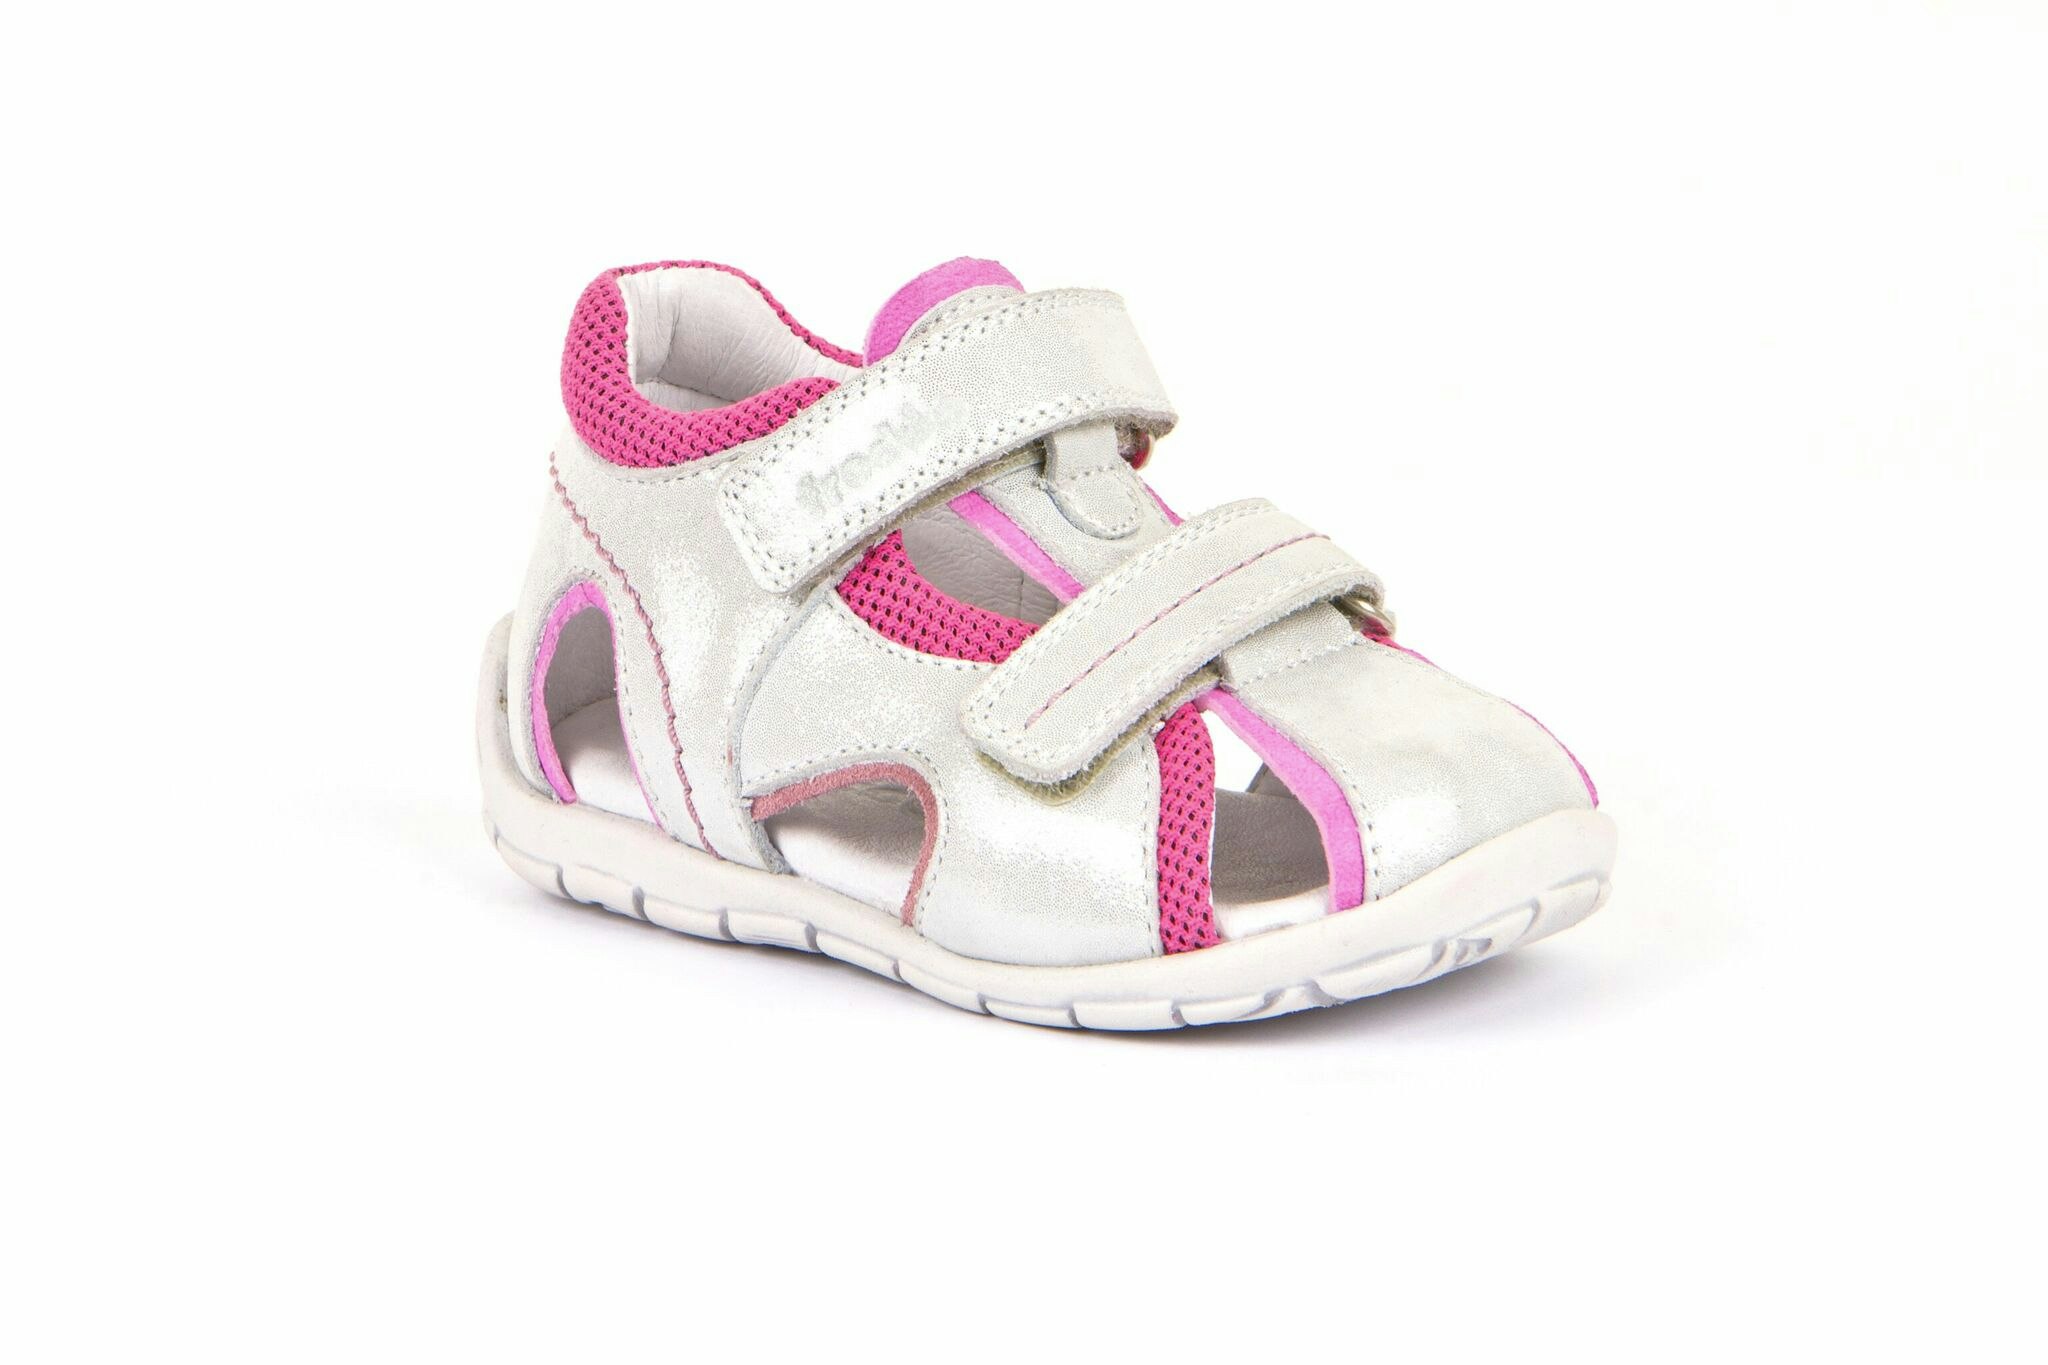 Sandaler barn vita metallic rosa lära gå